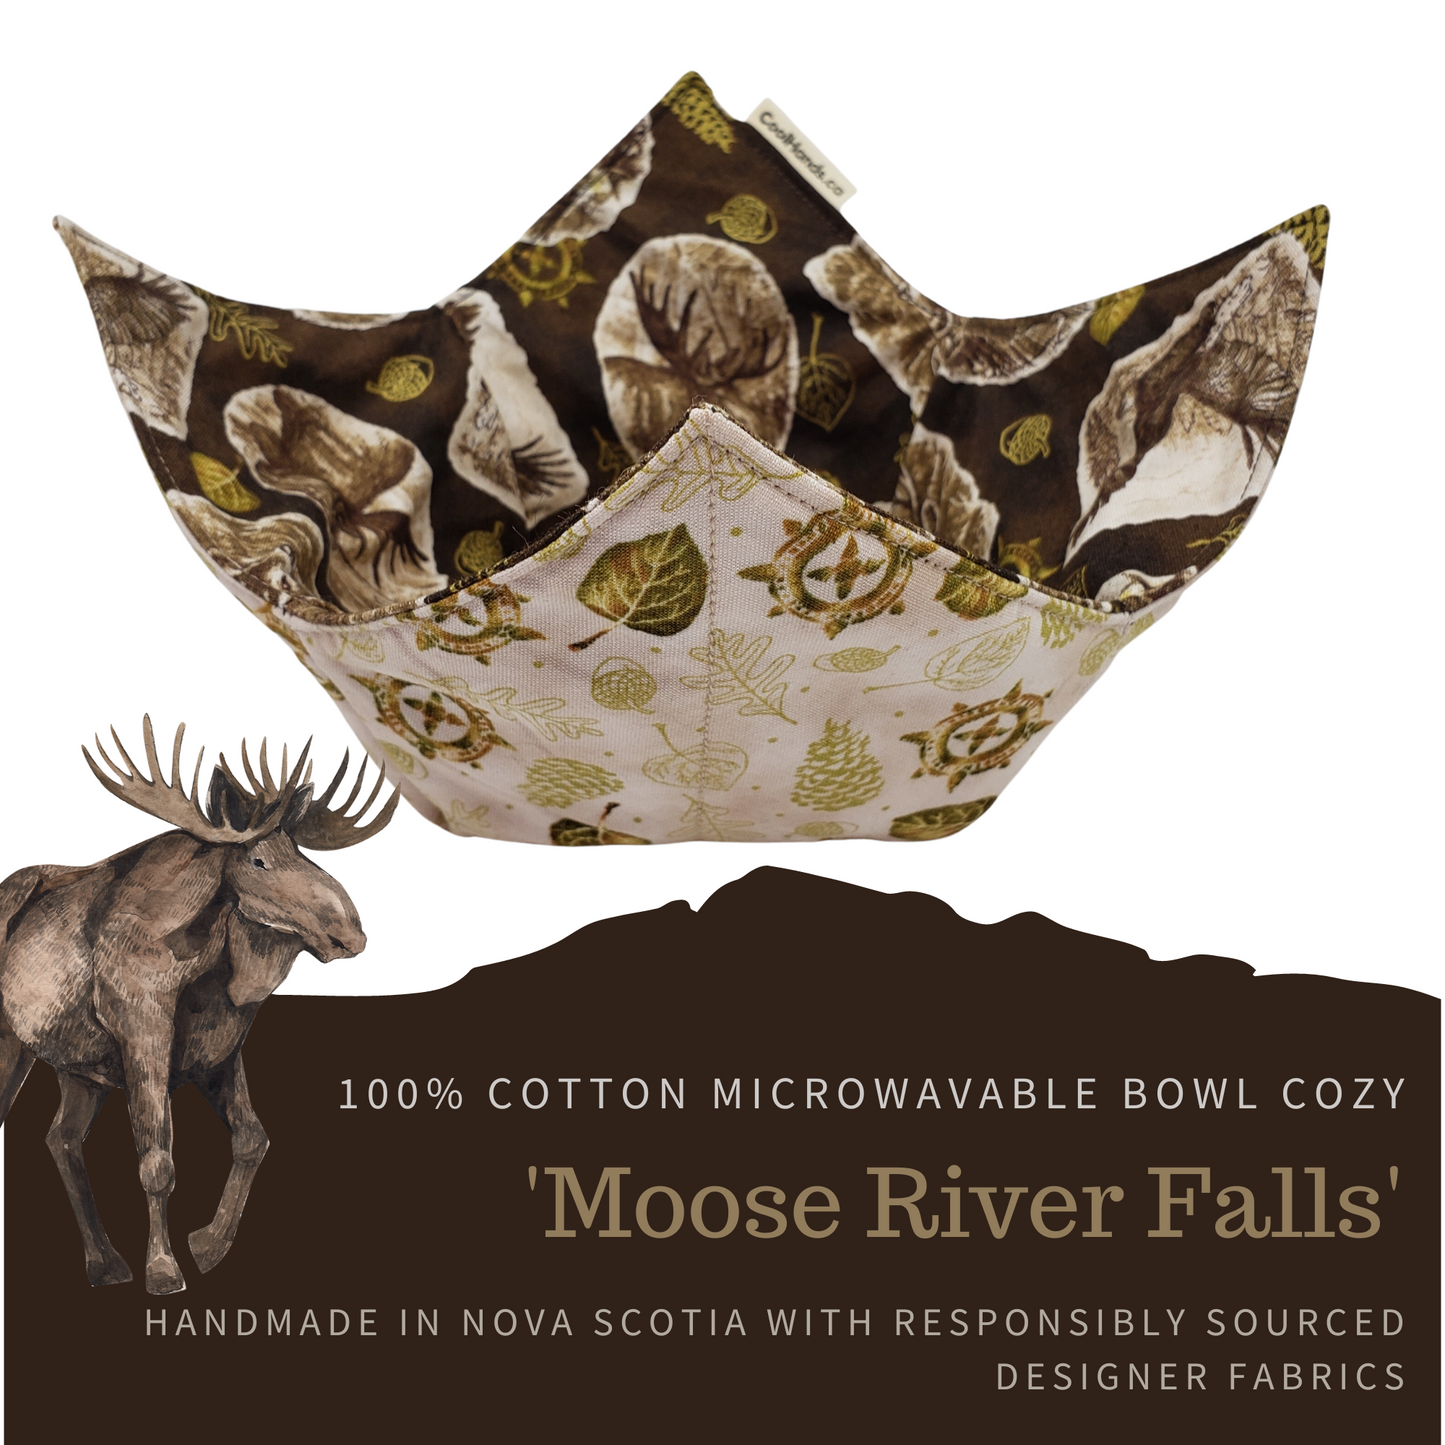 100% Cotton Microwavable Bowl Cozy - "Moose River Falls"